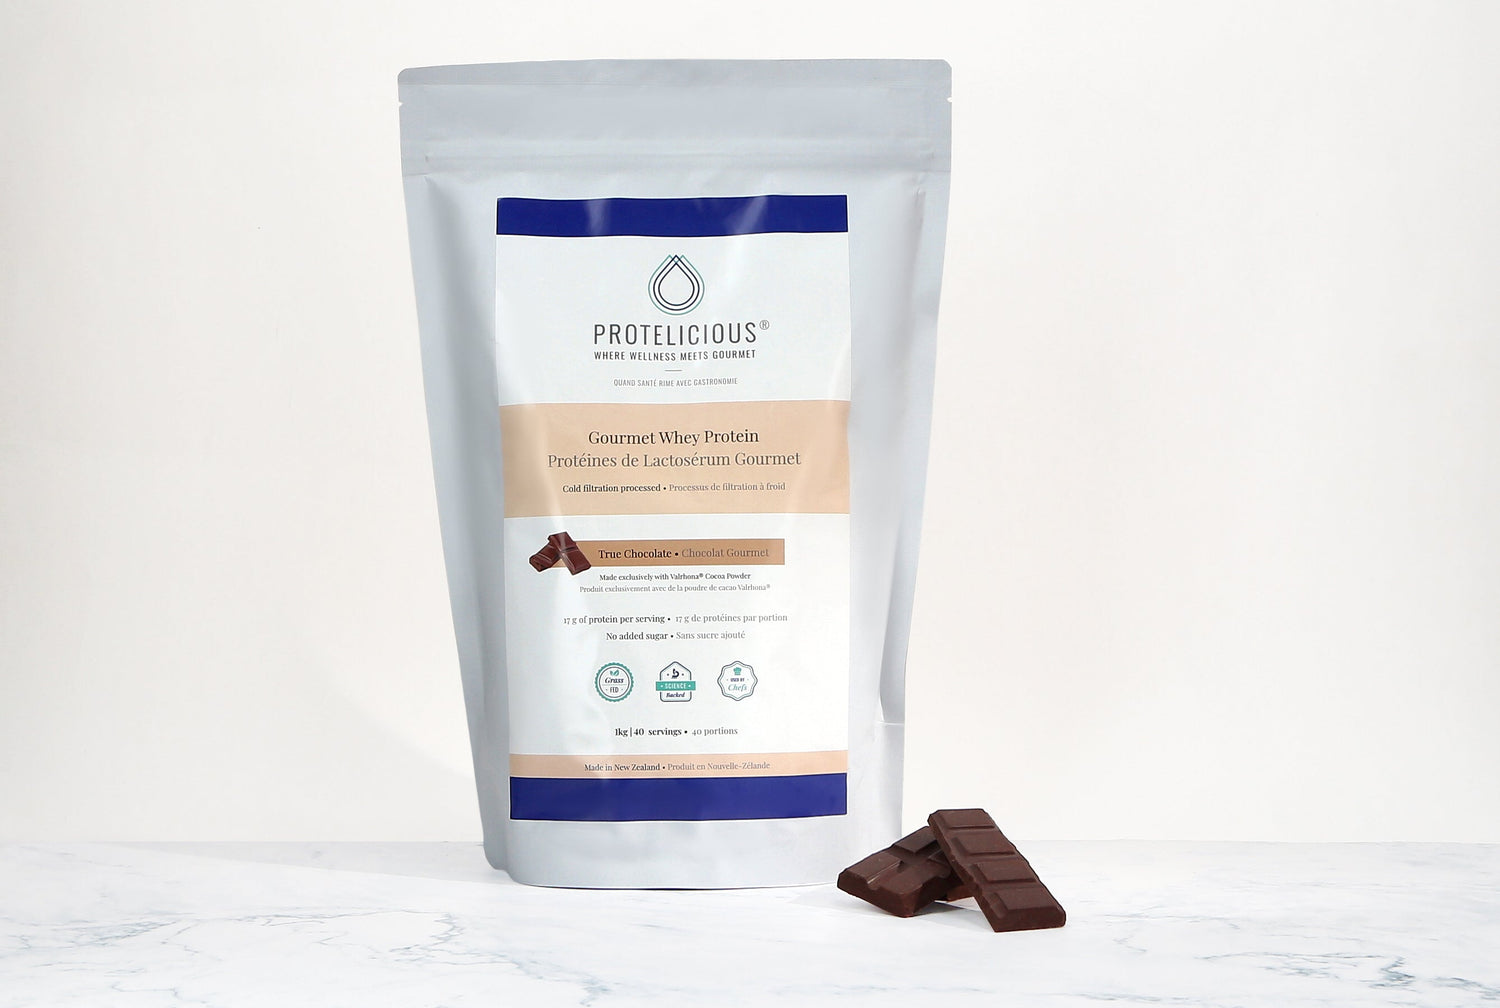 Gourmet Whey Protein – True Chocolate | 1kg